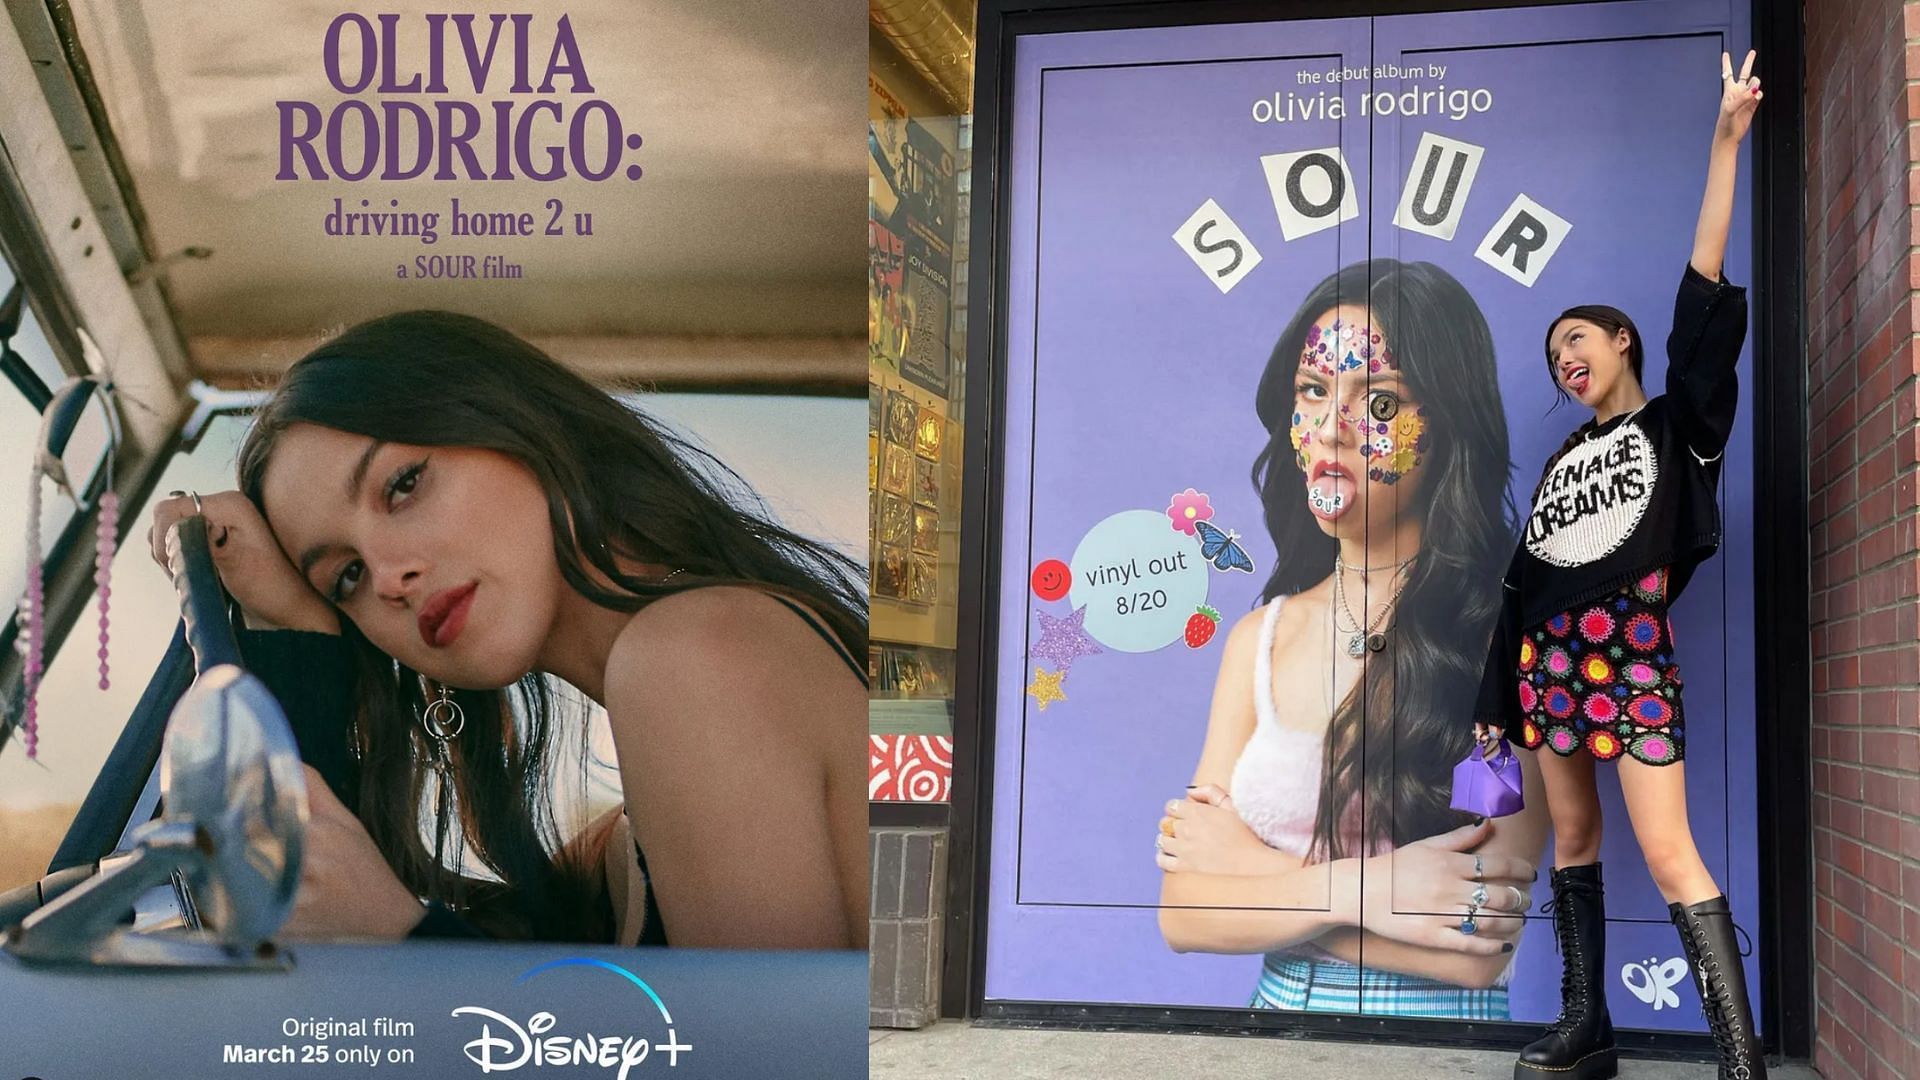 When will Olivia Rodrigo driving home 2 u air on Disney+?